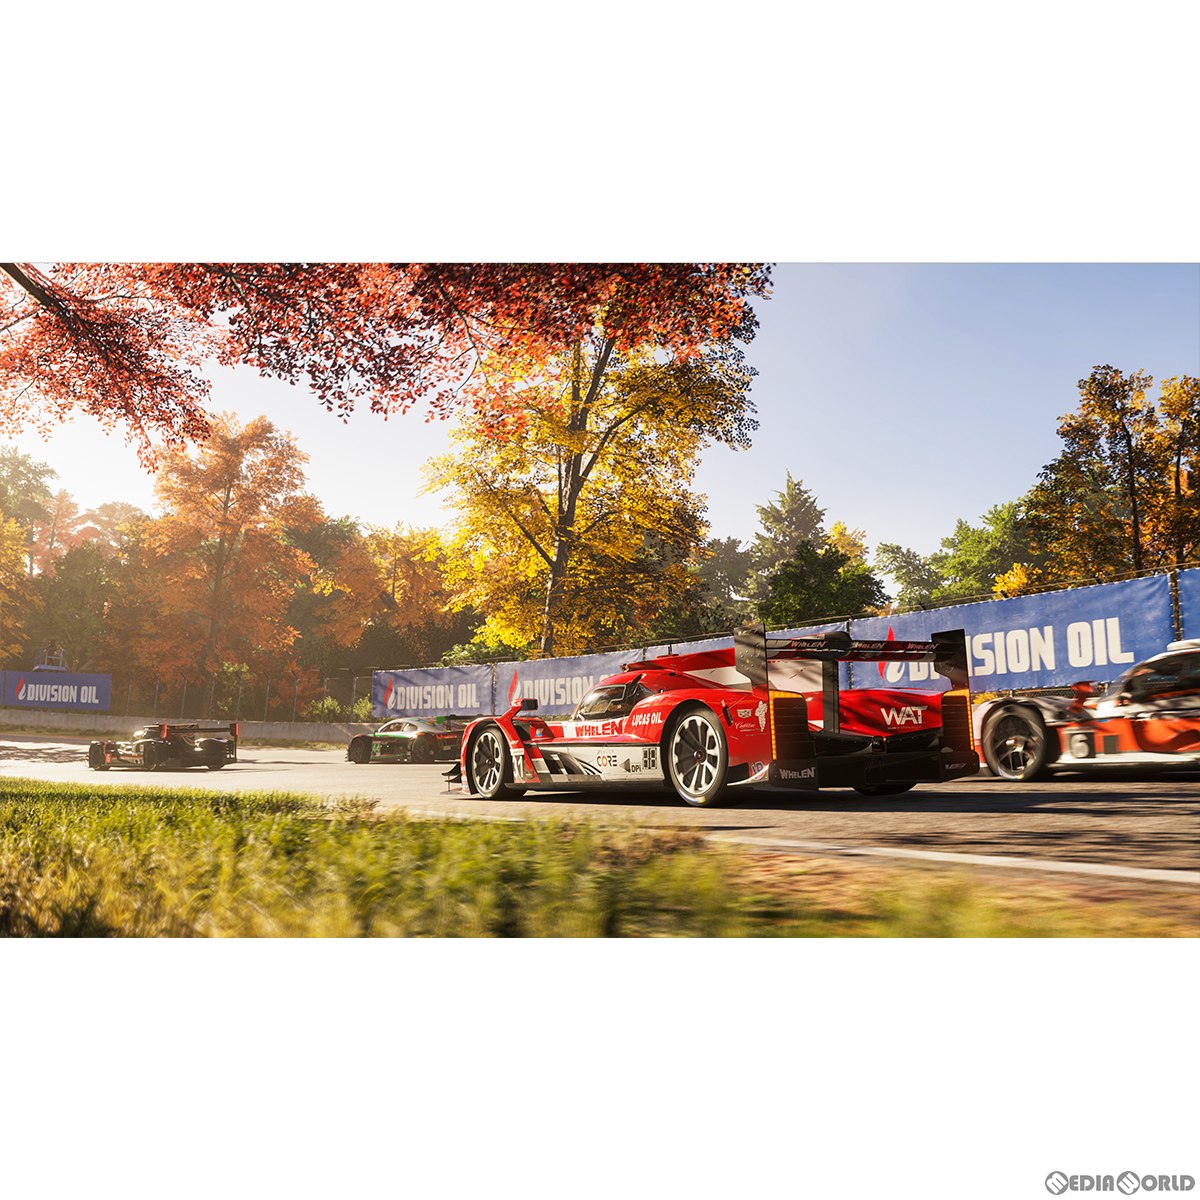 [ б/у немедленная уплата ]{XboxX/S}Forza Motorsport( Forza Motor Sport )(20231010)